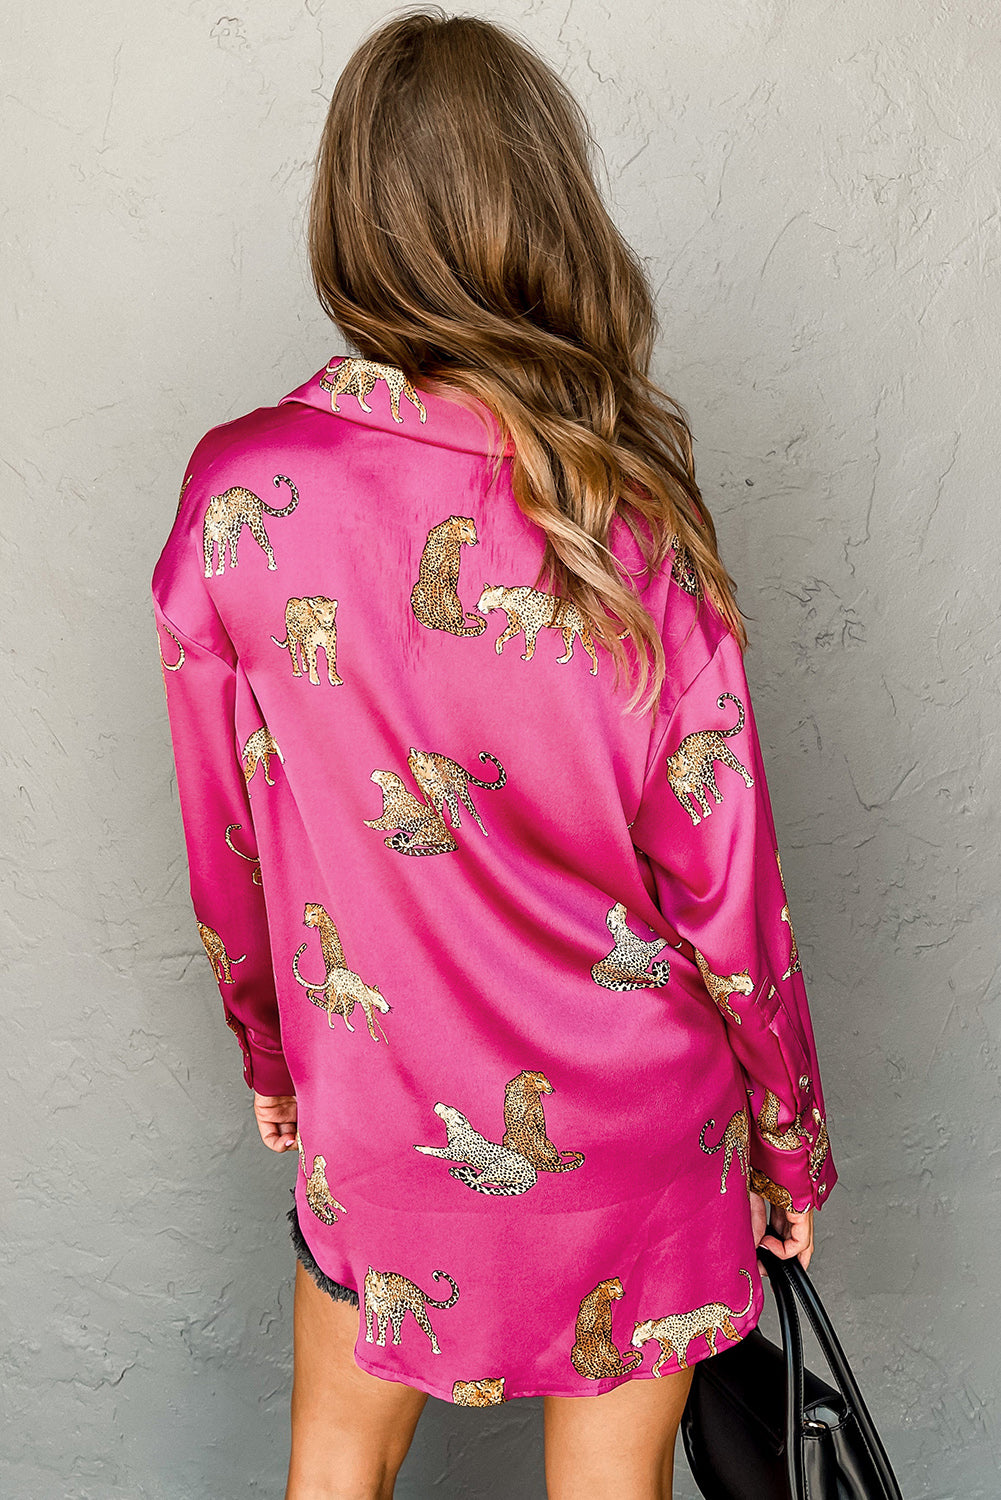 Hot Pink Cheetah Animal Print Button Up Blouse